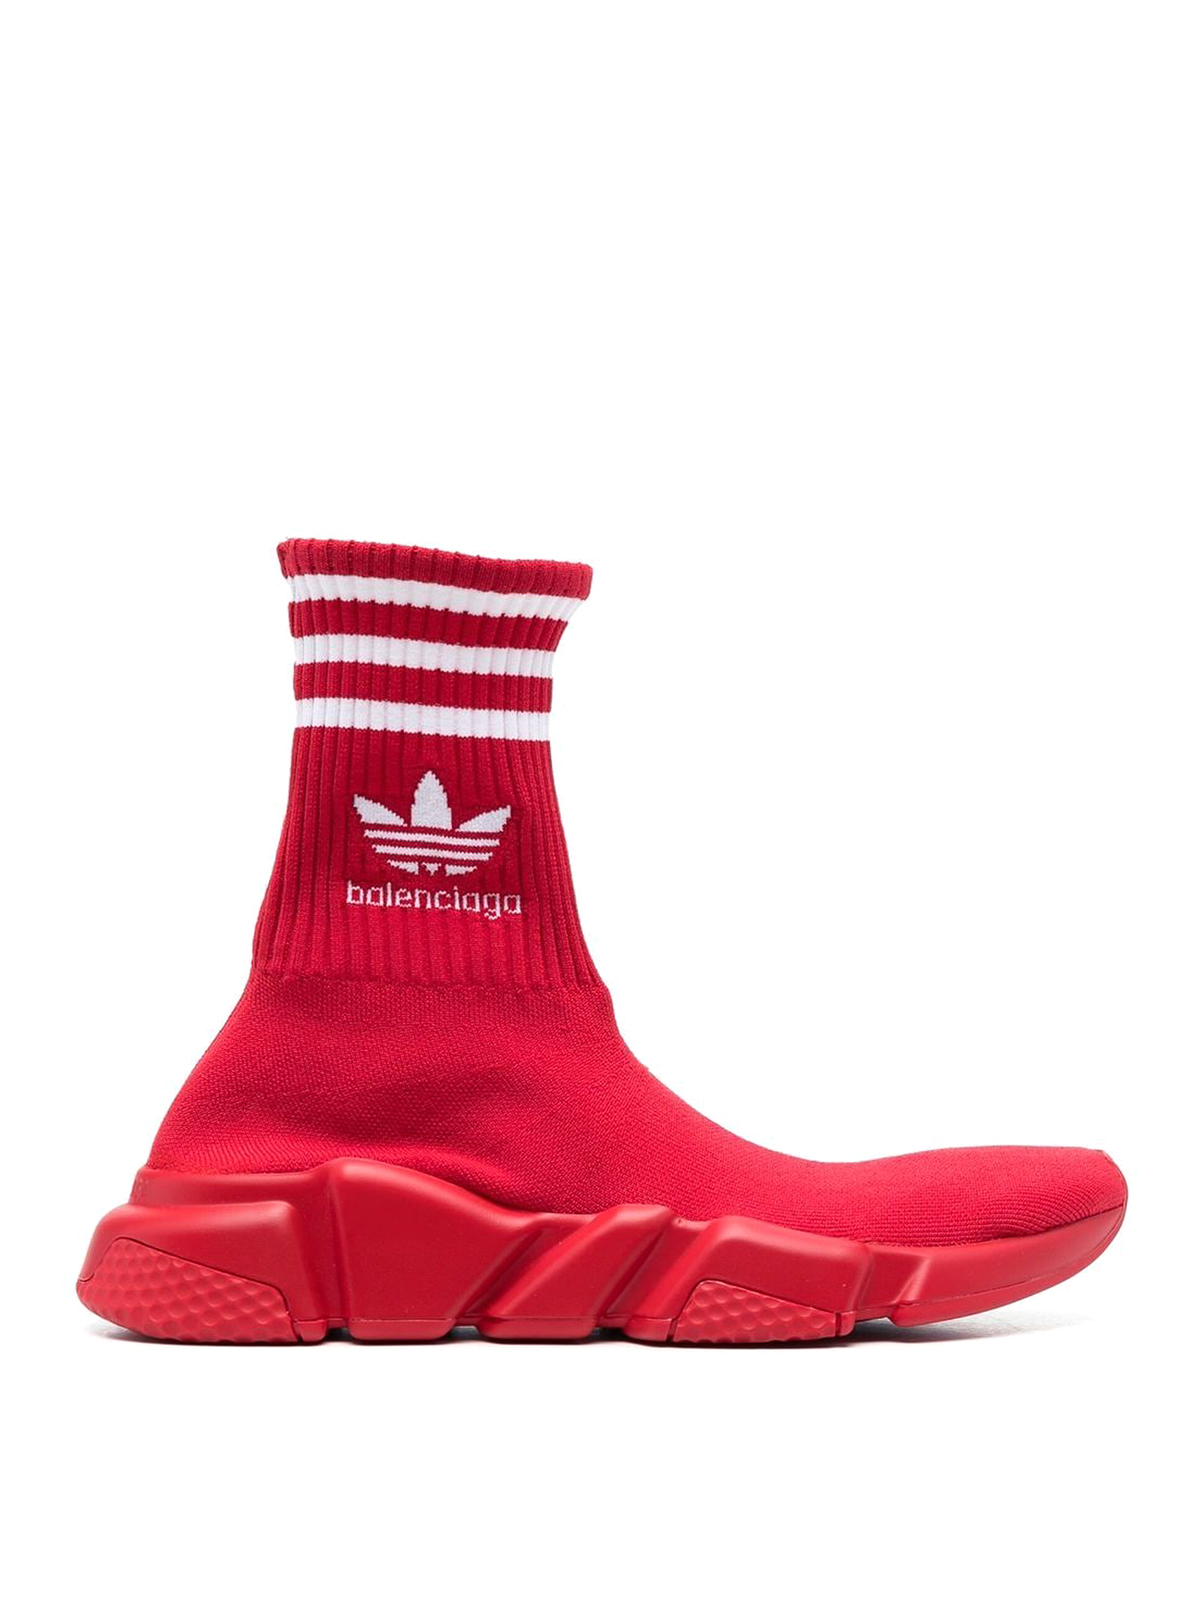 Adidas Originals Speed Trainers In Red